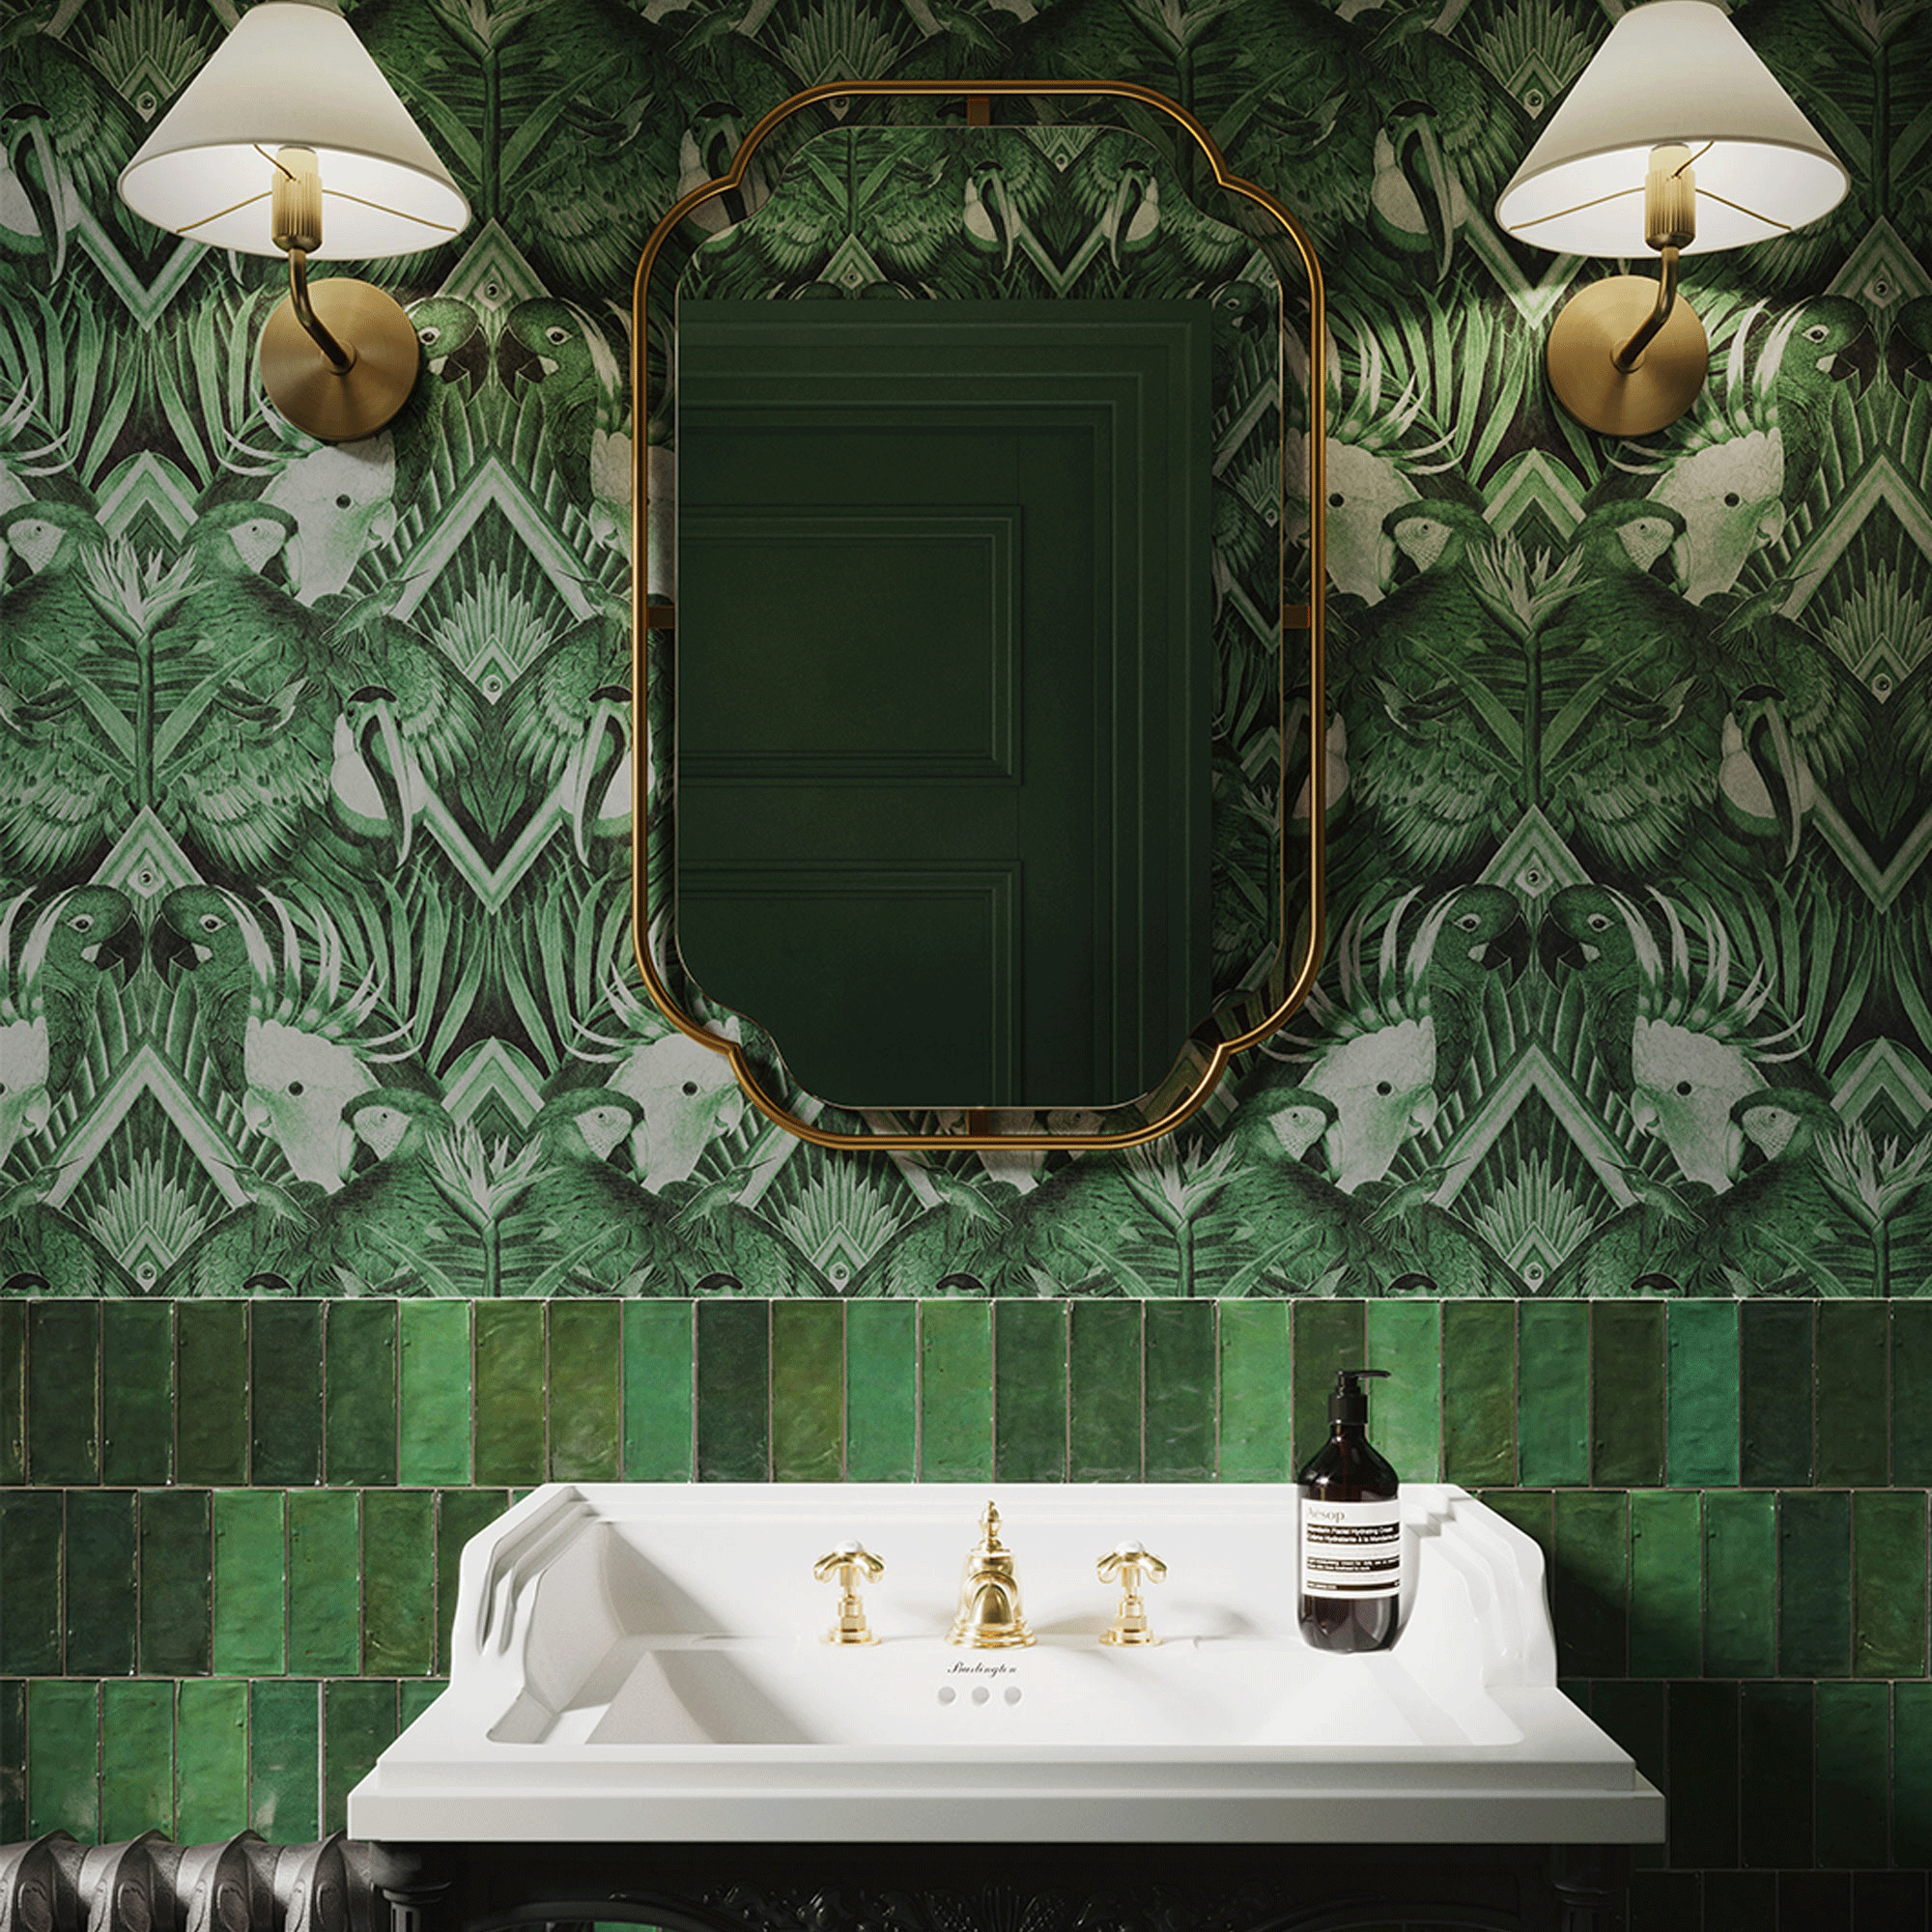 Green wallpaper in a bathroom